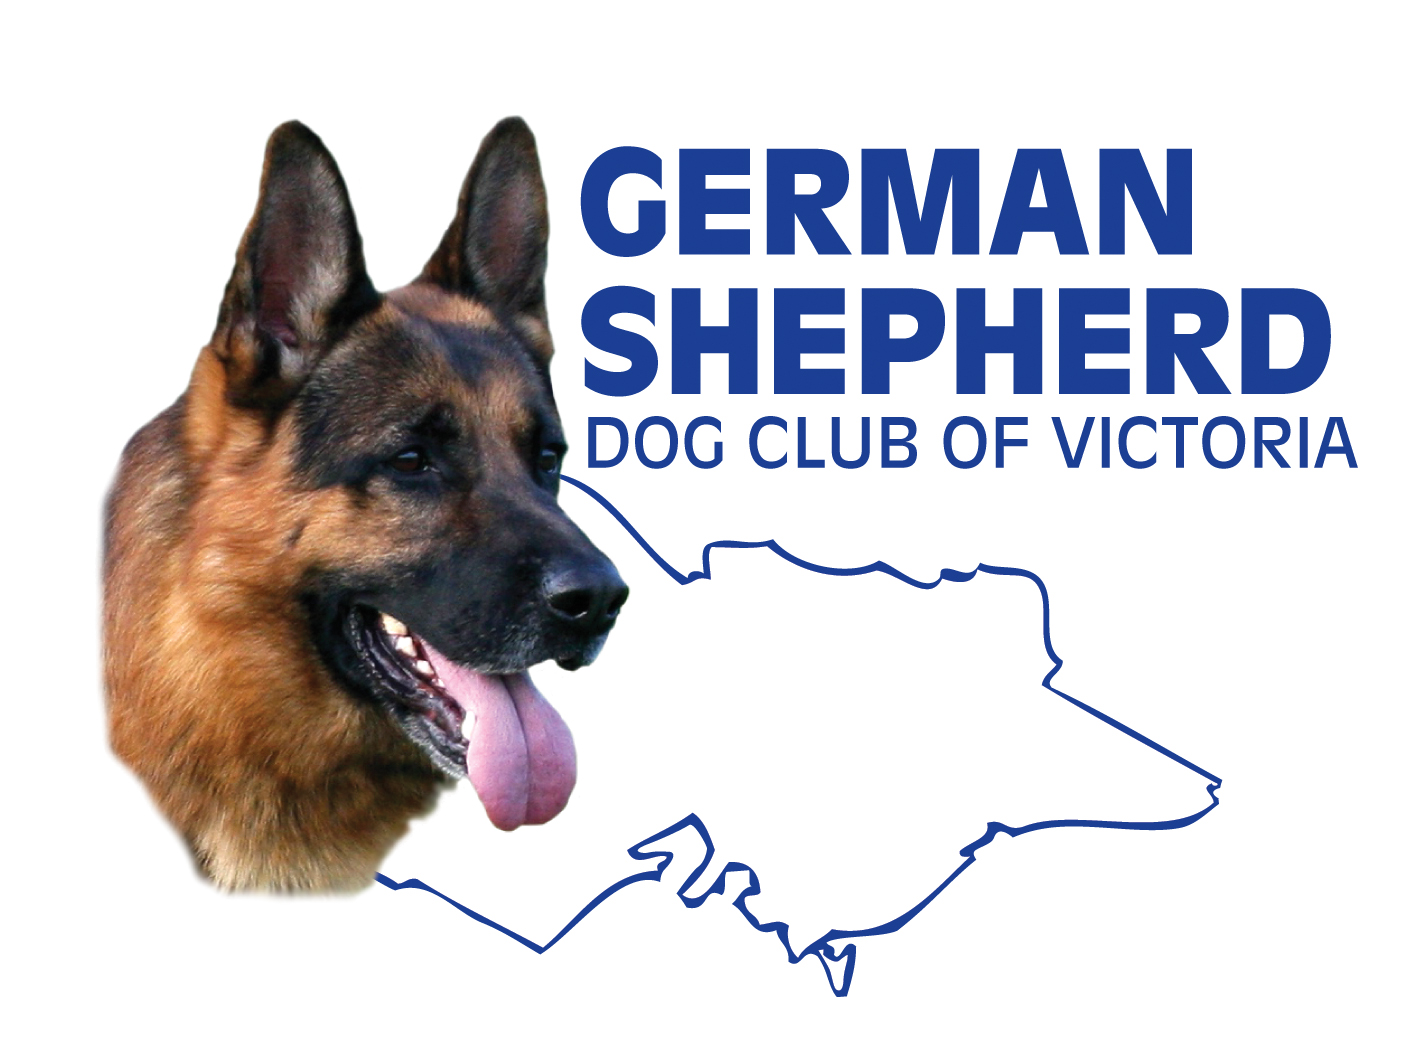 German Shepherd Puppy Exercise Chart